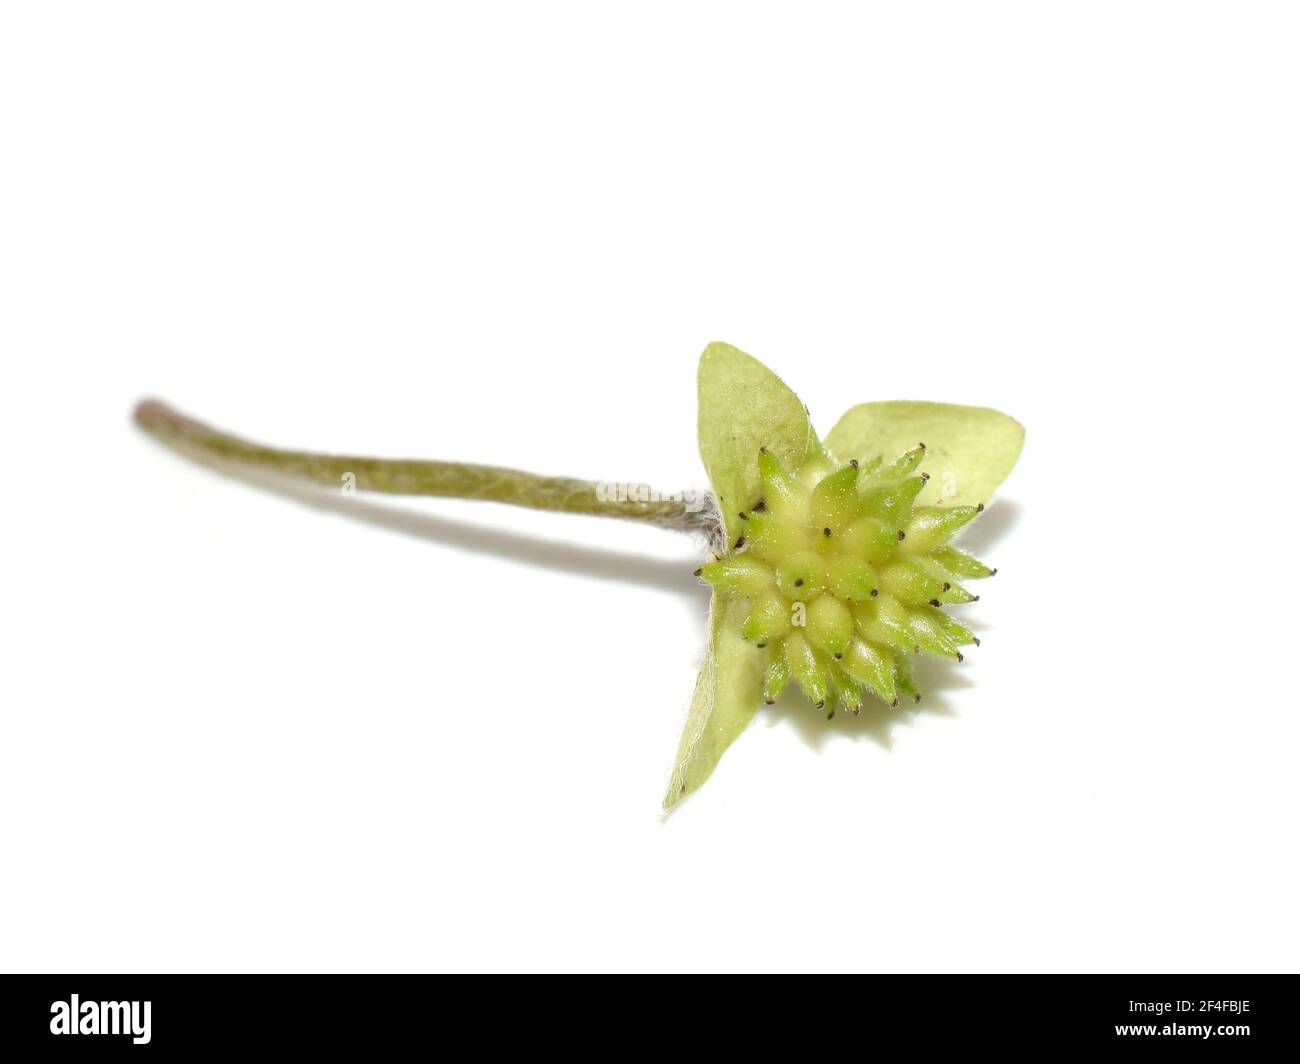 Seed from myrmecochory blue anemone Hepatica nobilis  on white background Stock Photo